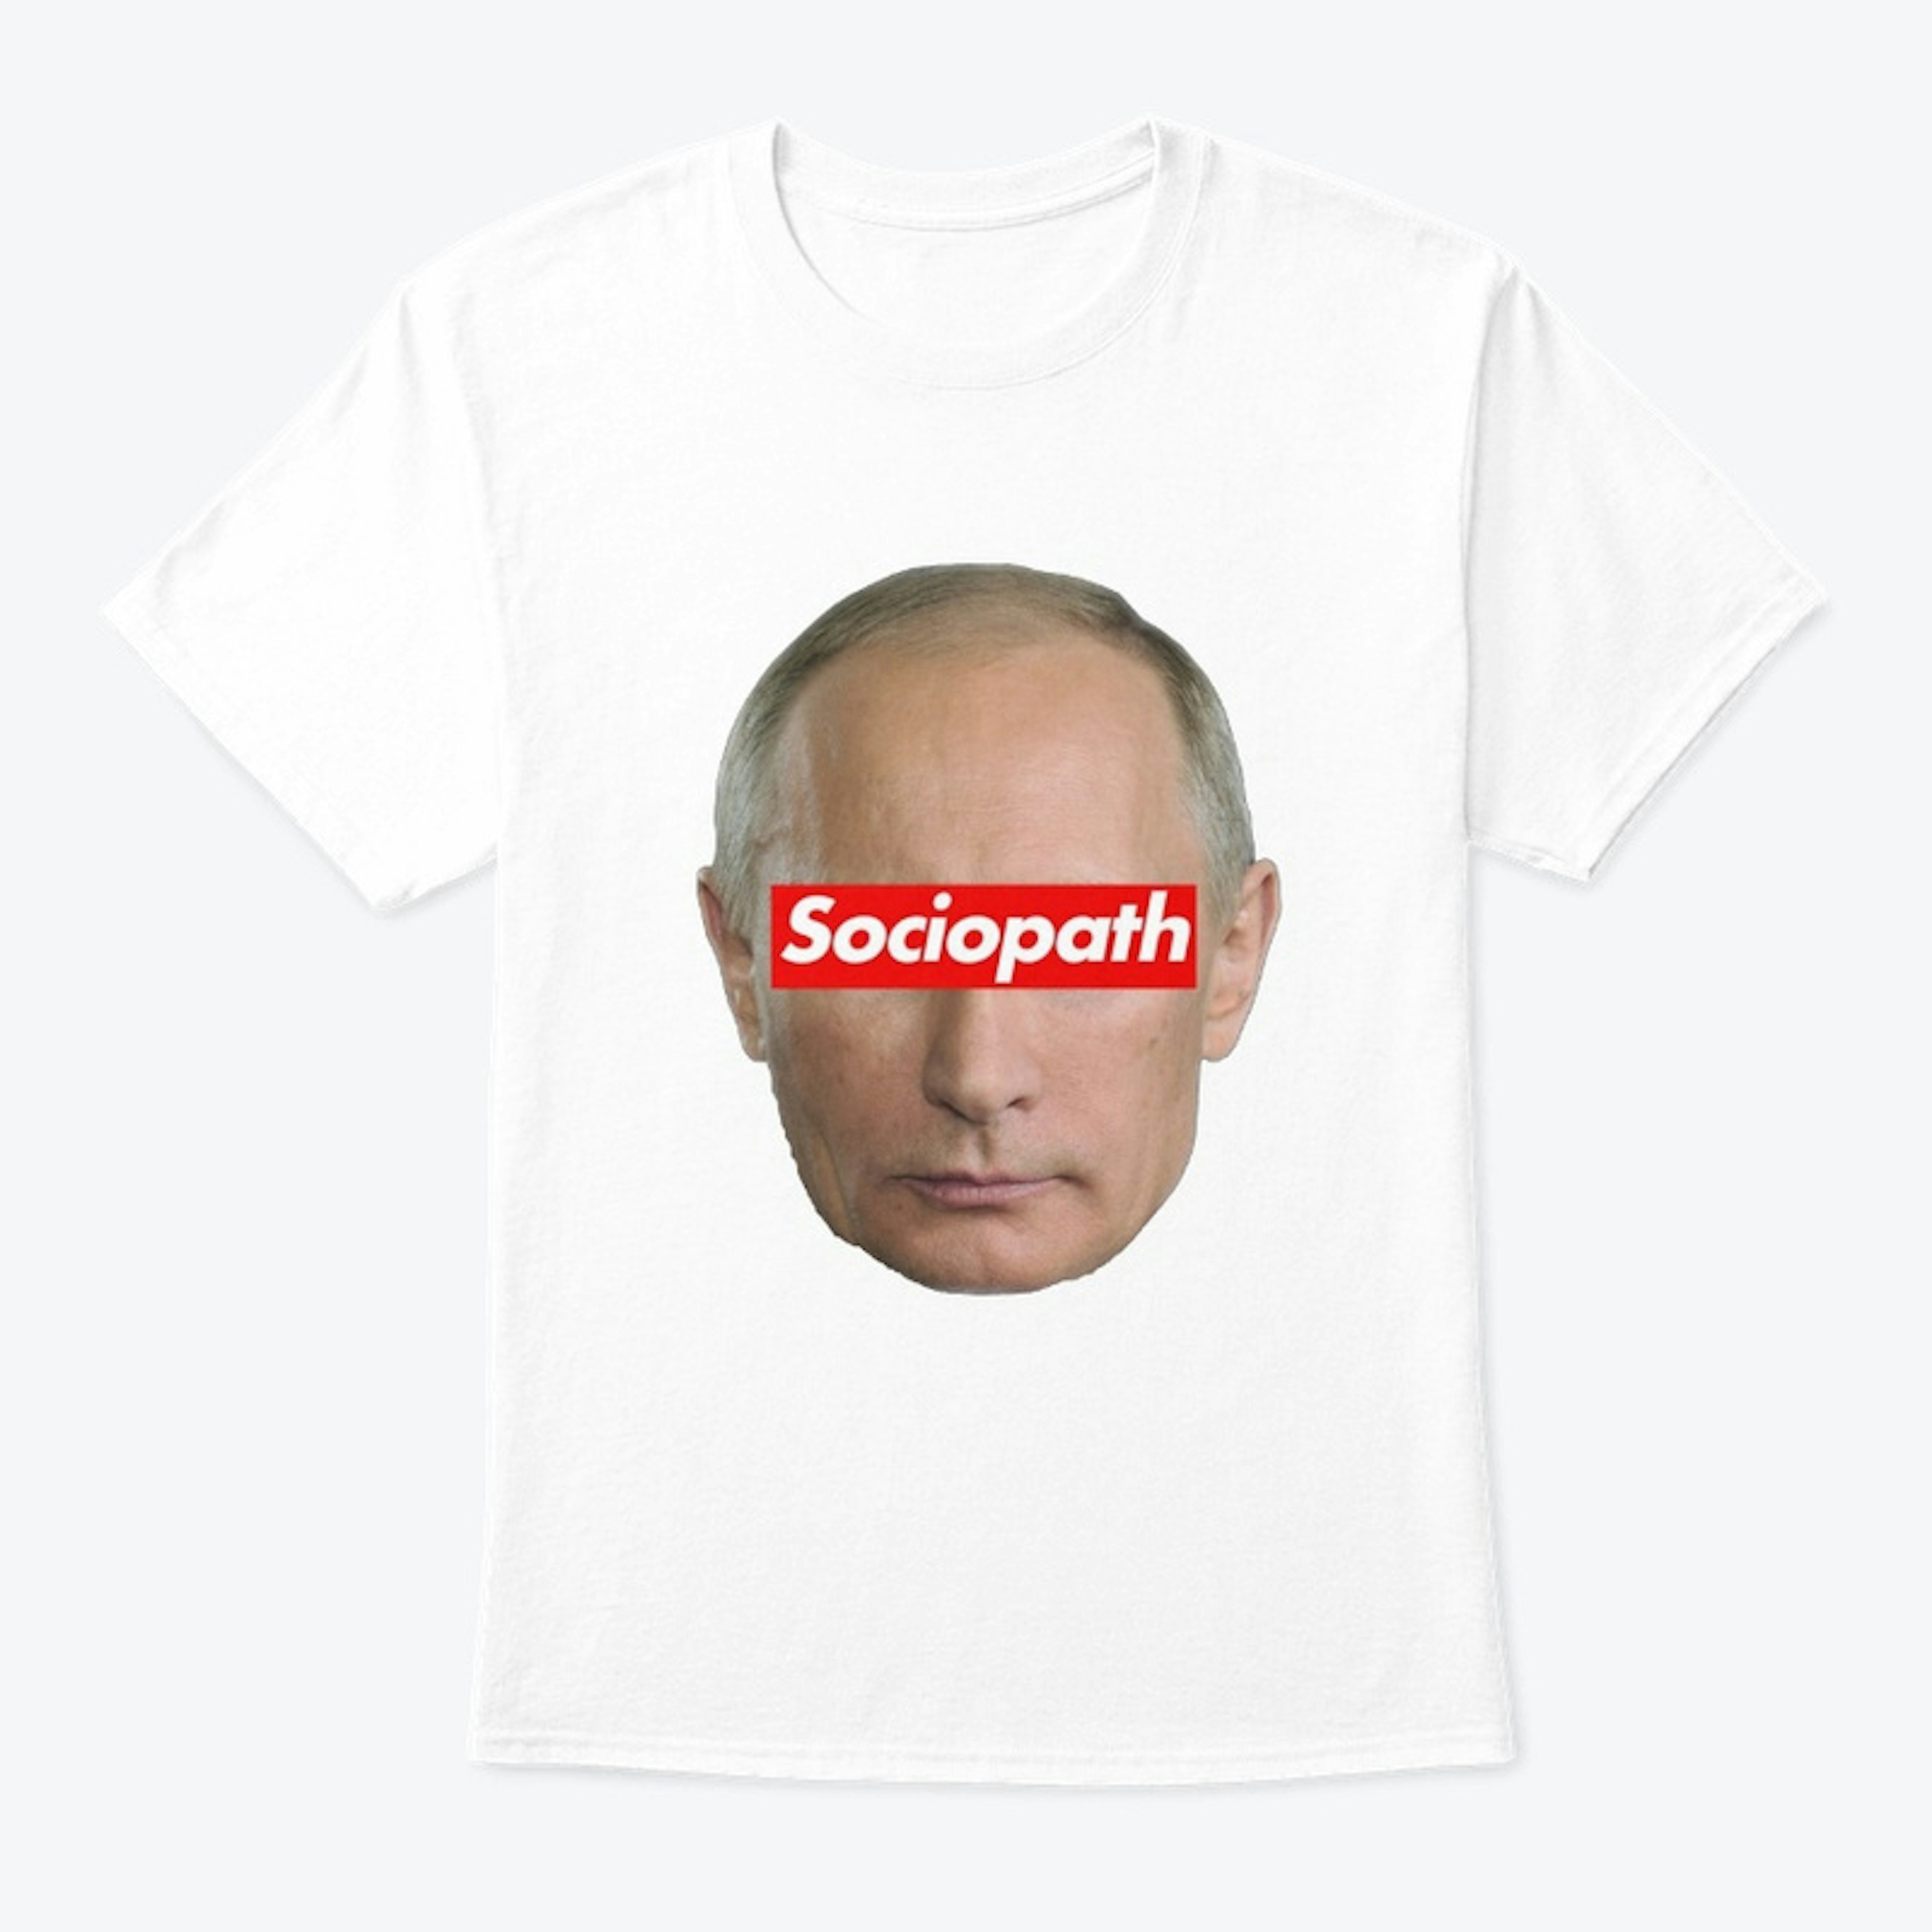 Vladimir Putin Merchandise